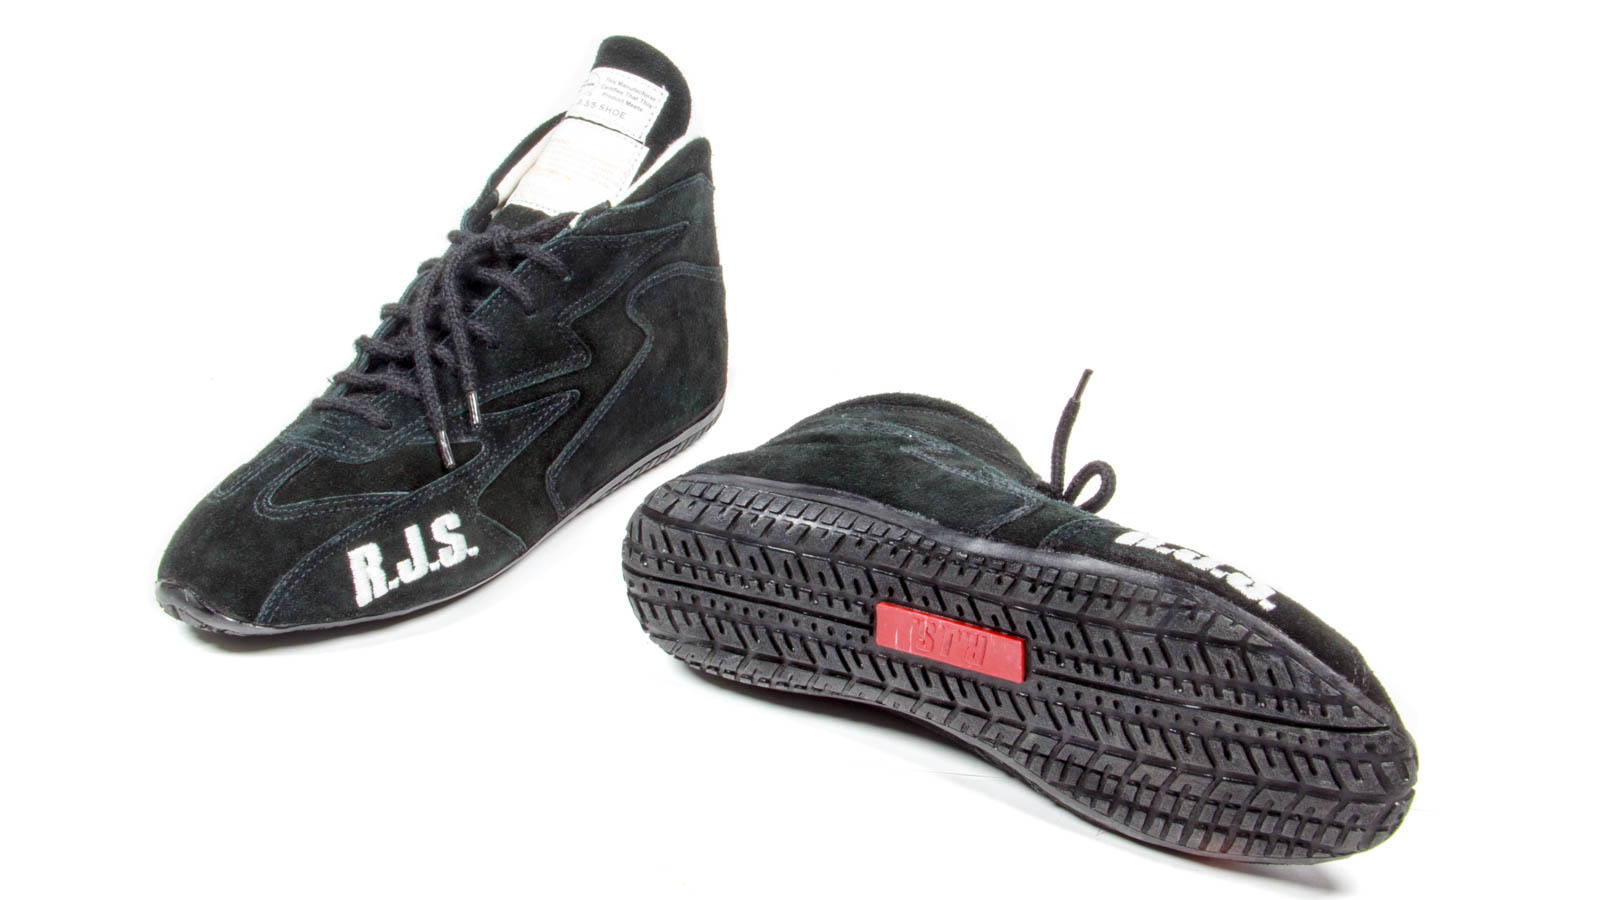 RJS, Redline Racing Shoe Mid-Top Black Size 5 SFI-5